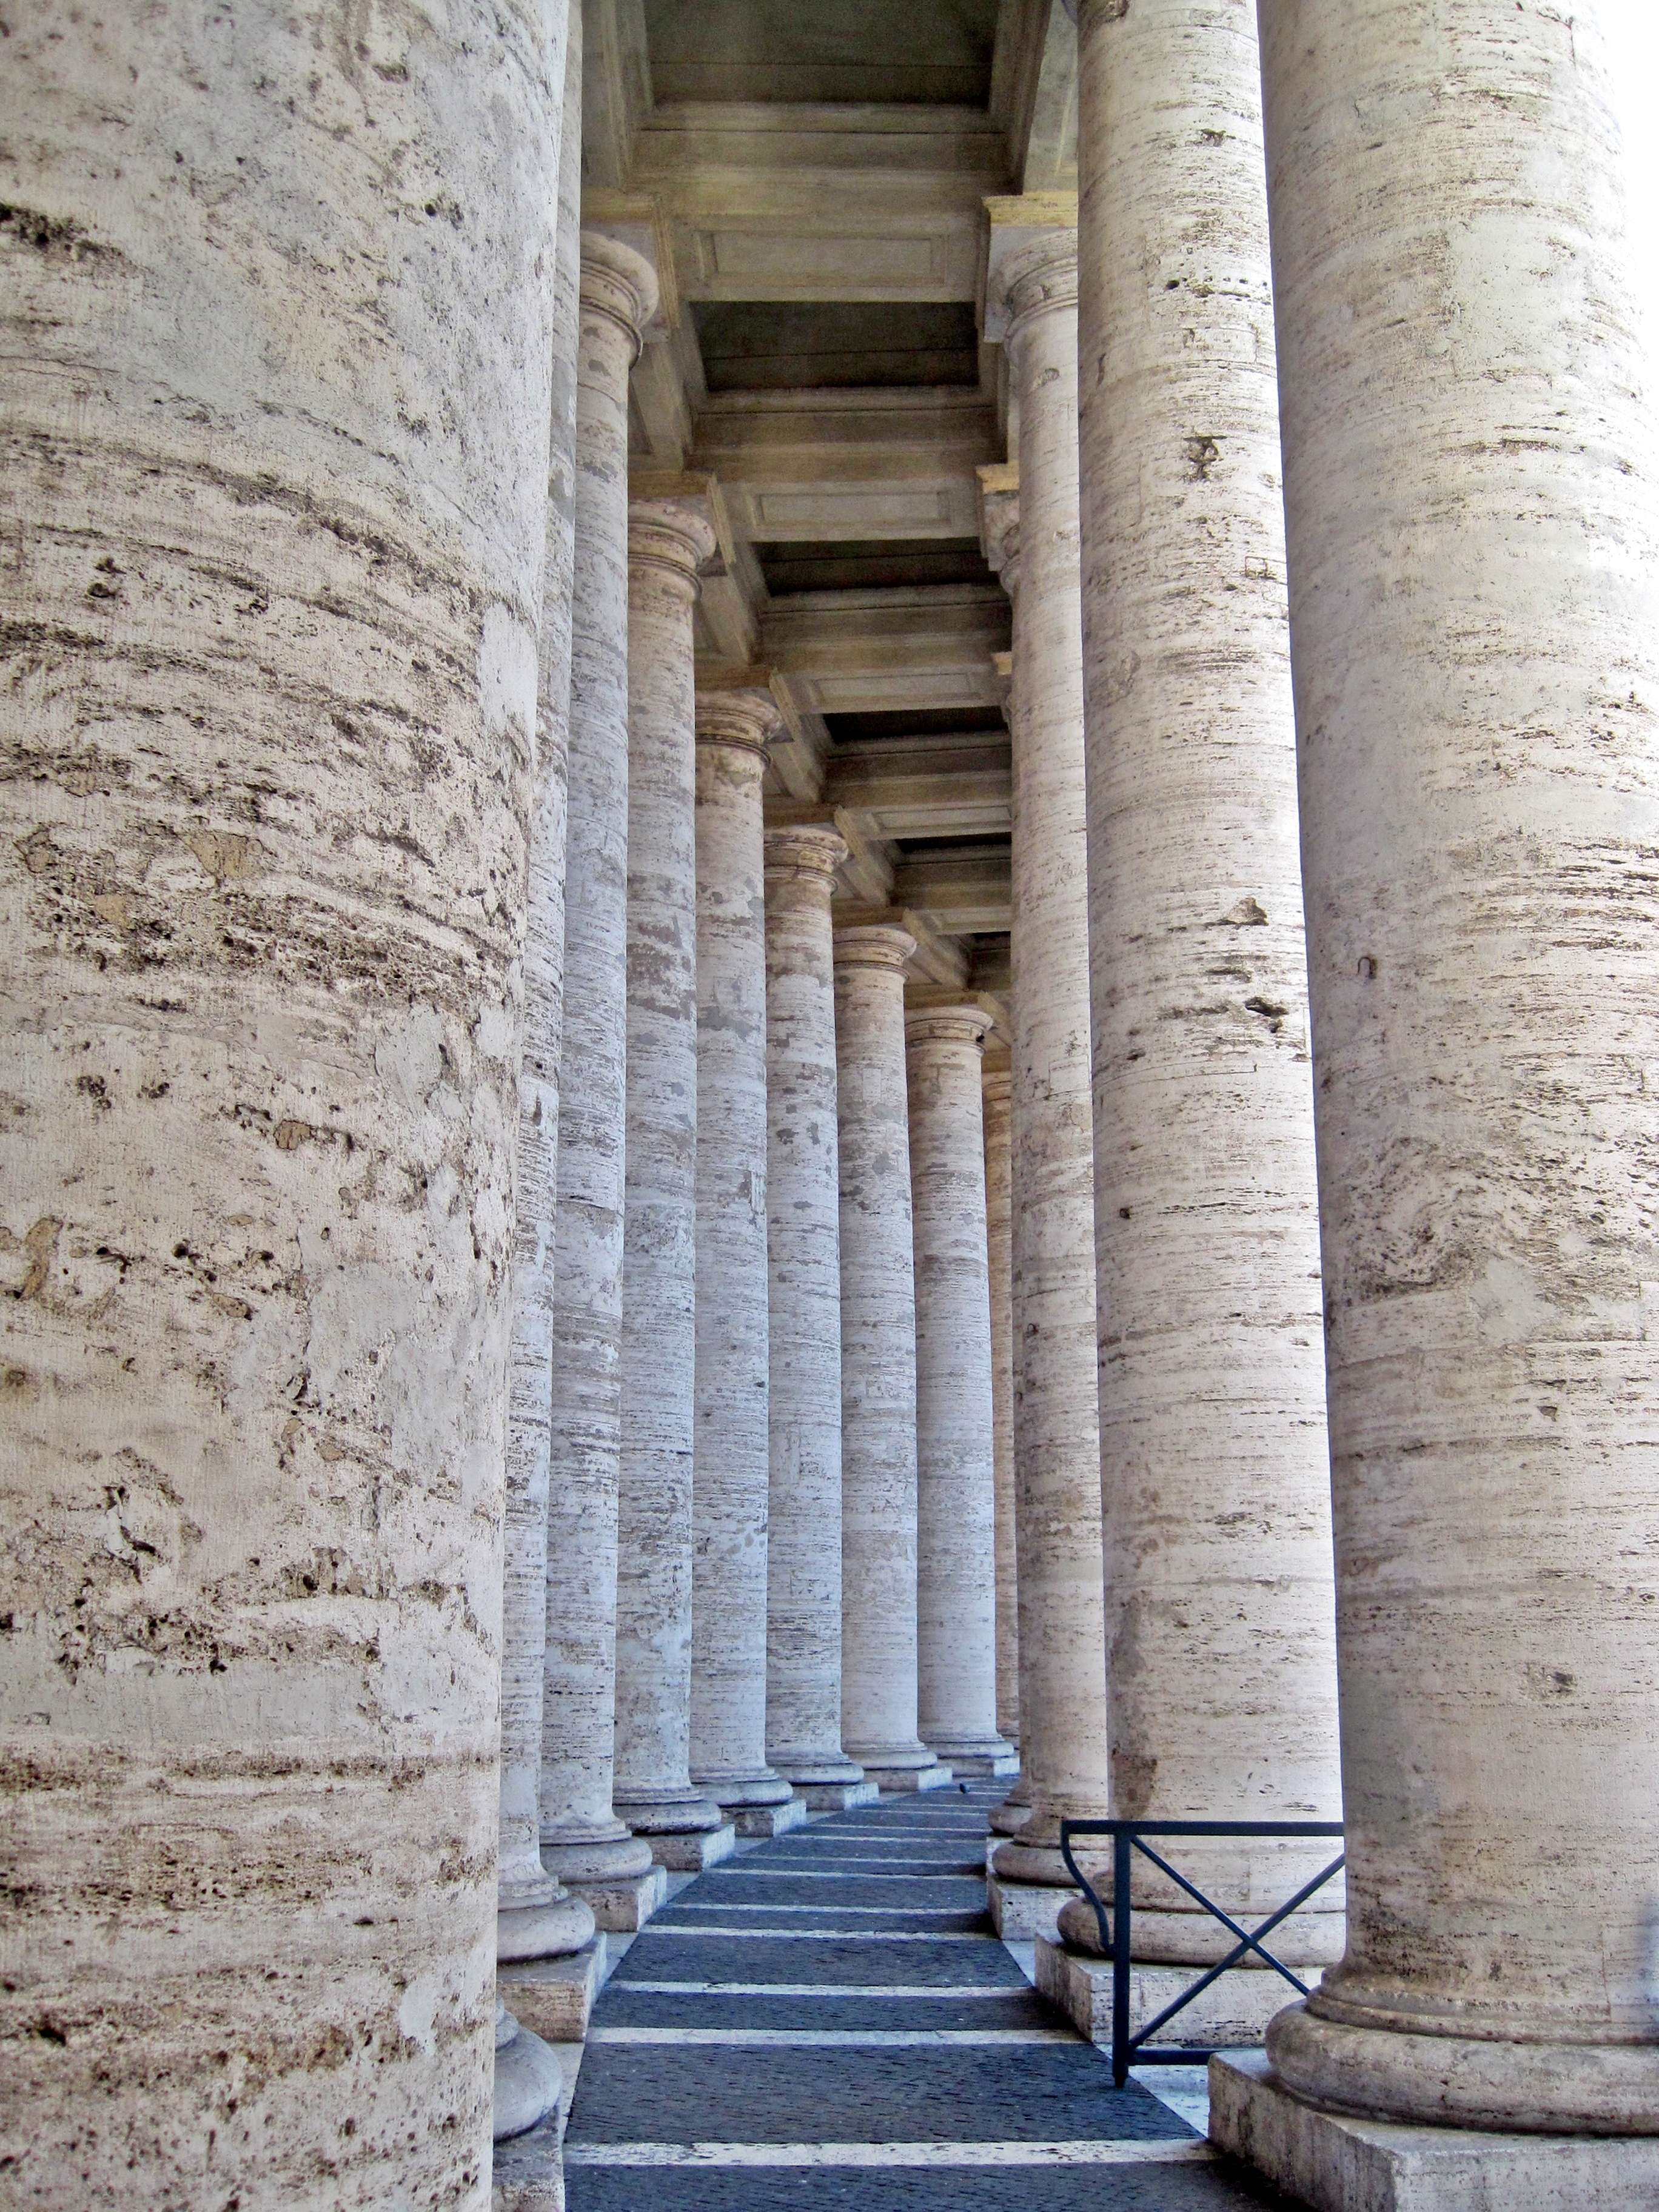 File:Bernini's Colonnade, St. Peter's Square, Rome, Italy.jpg ...